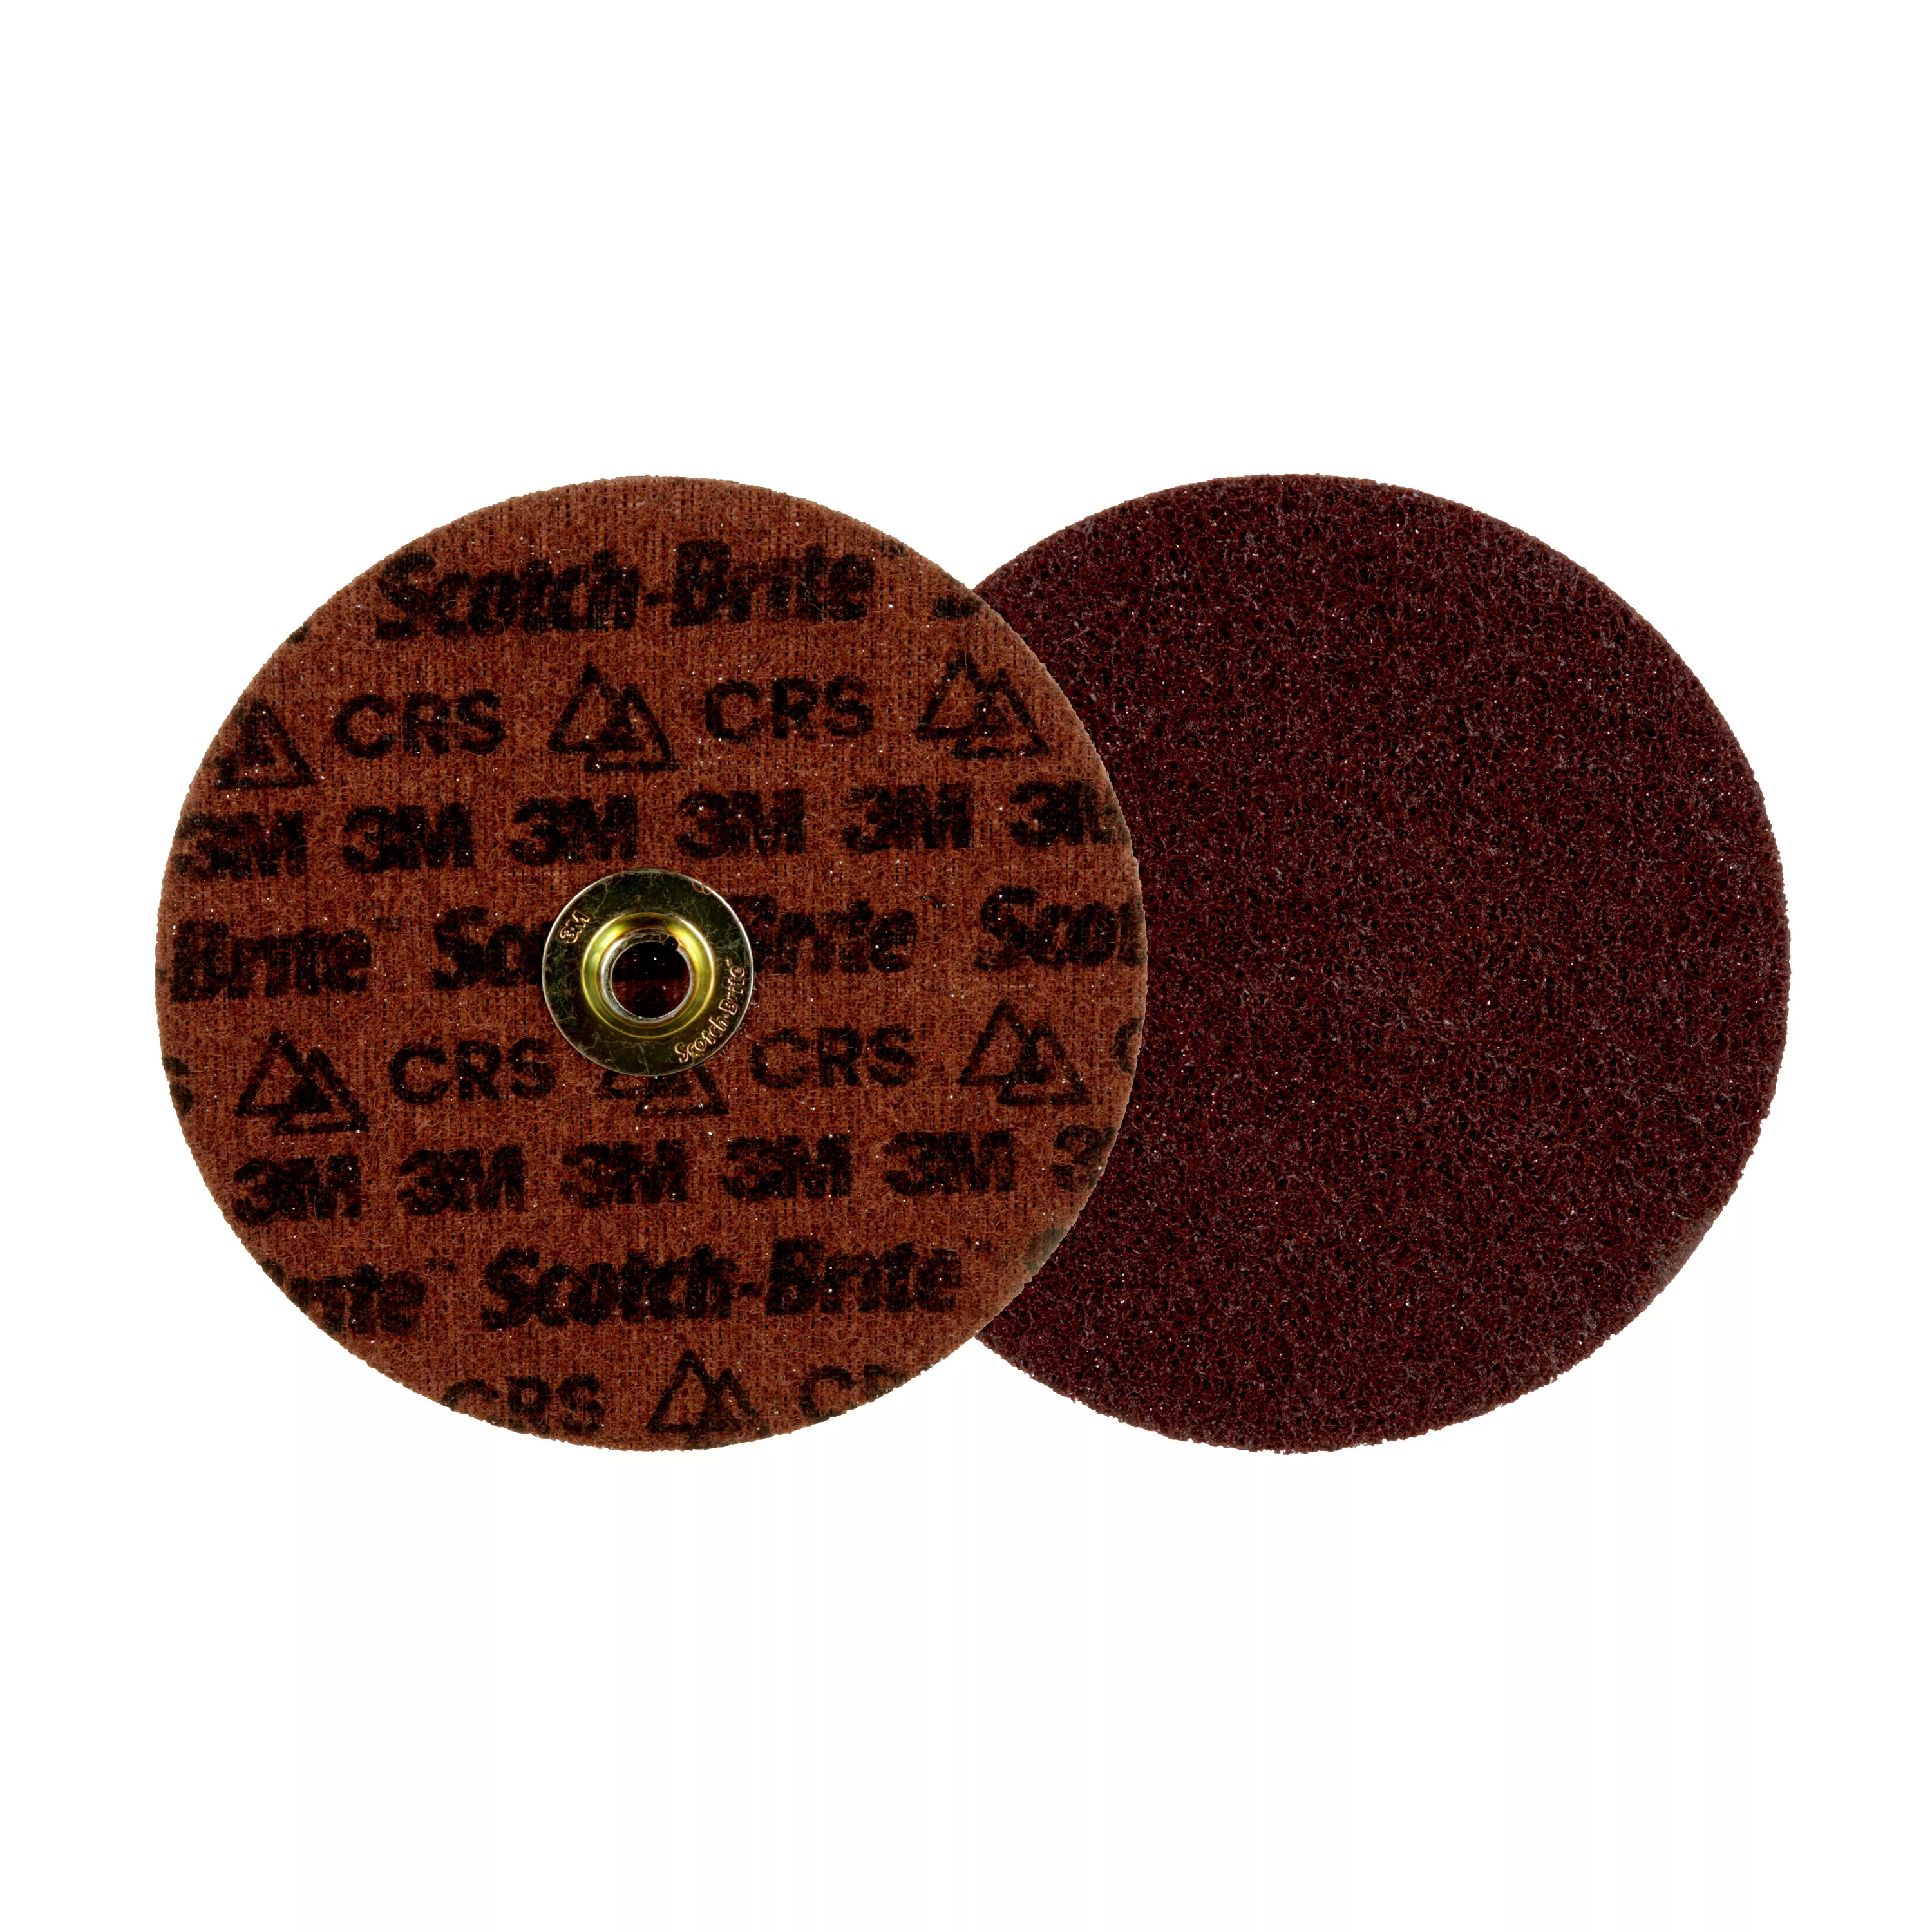 SKU 7100263261 | Scotch-Brite™ Precision Surface Conditioning TN Quick Change Disc